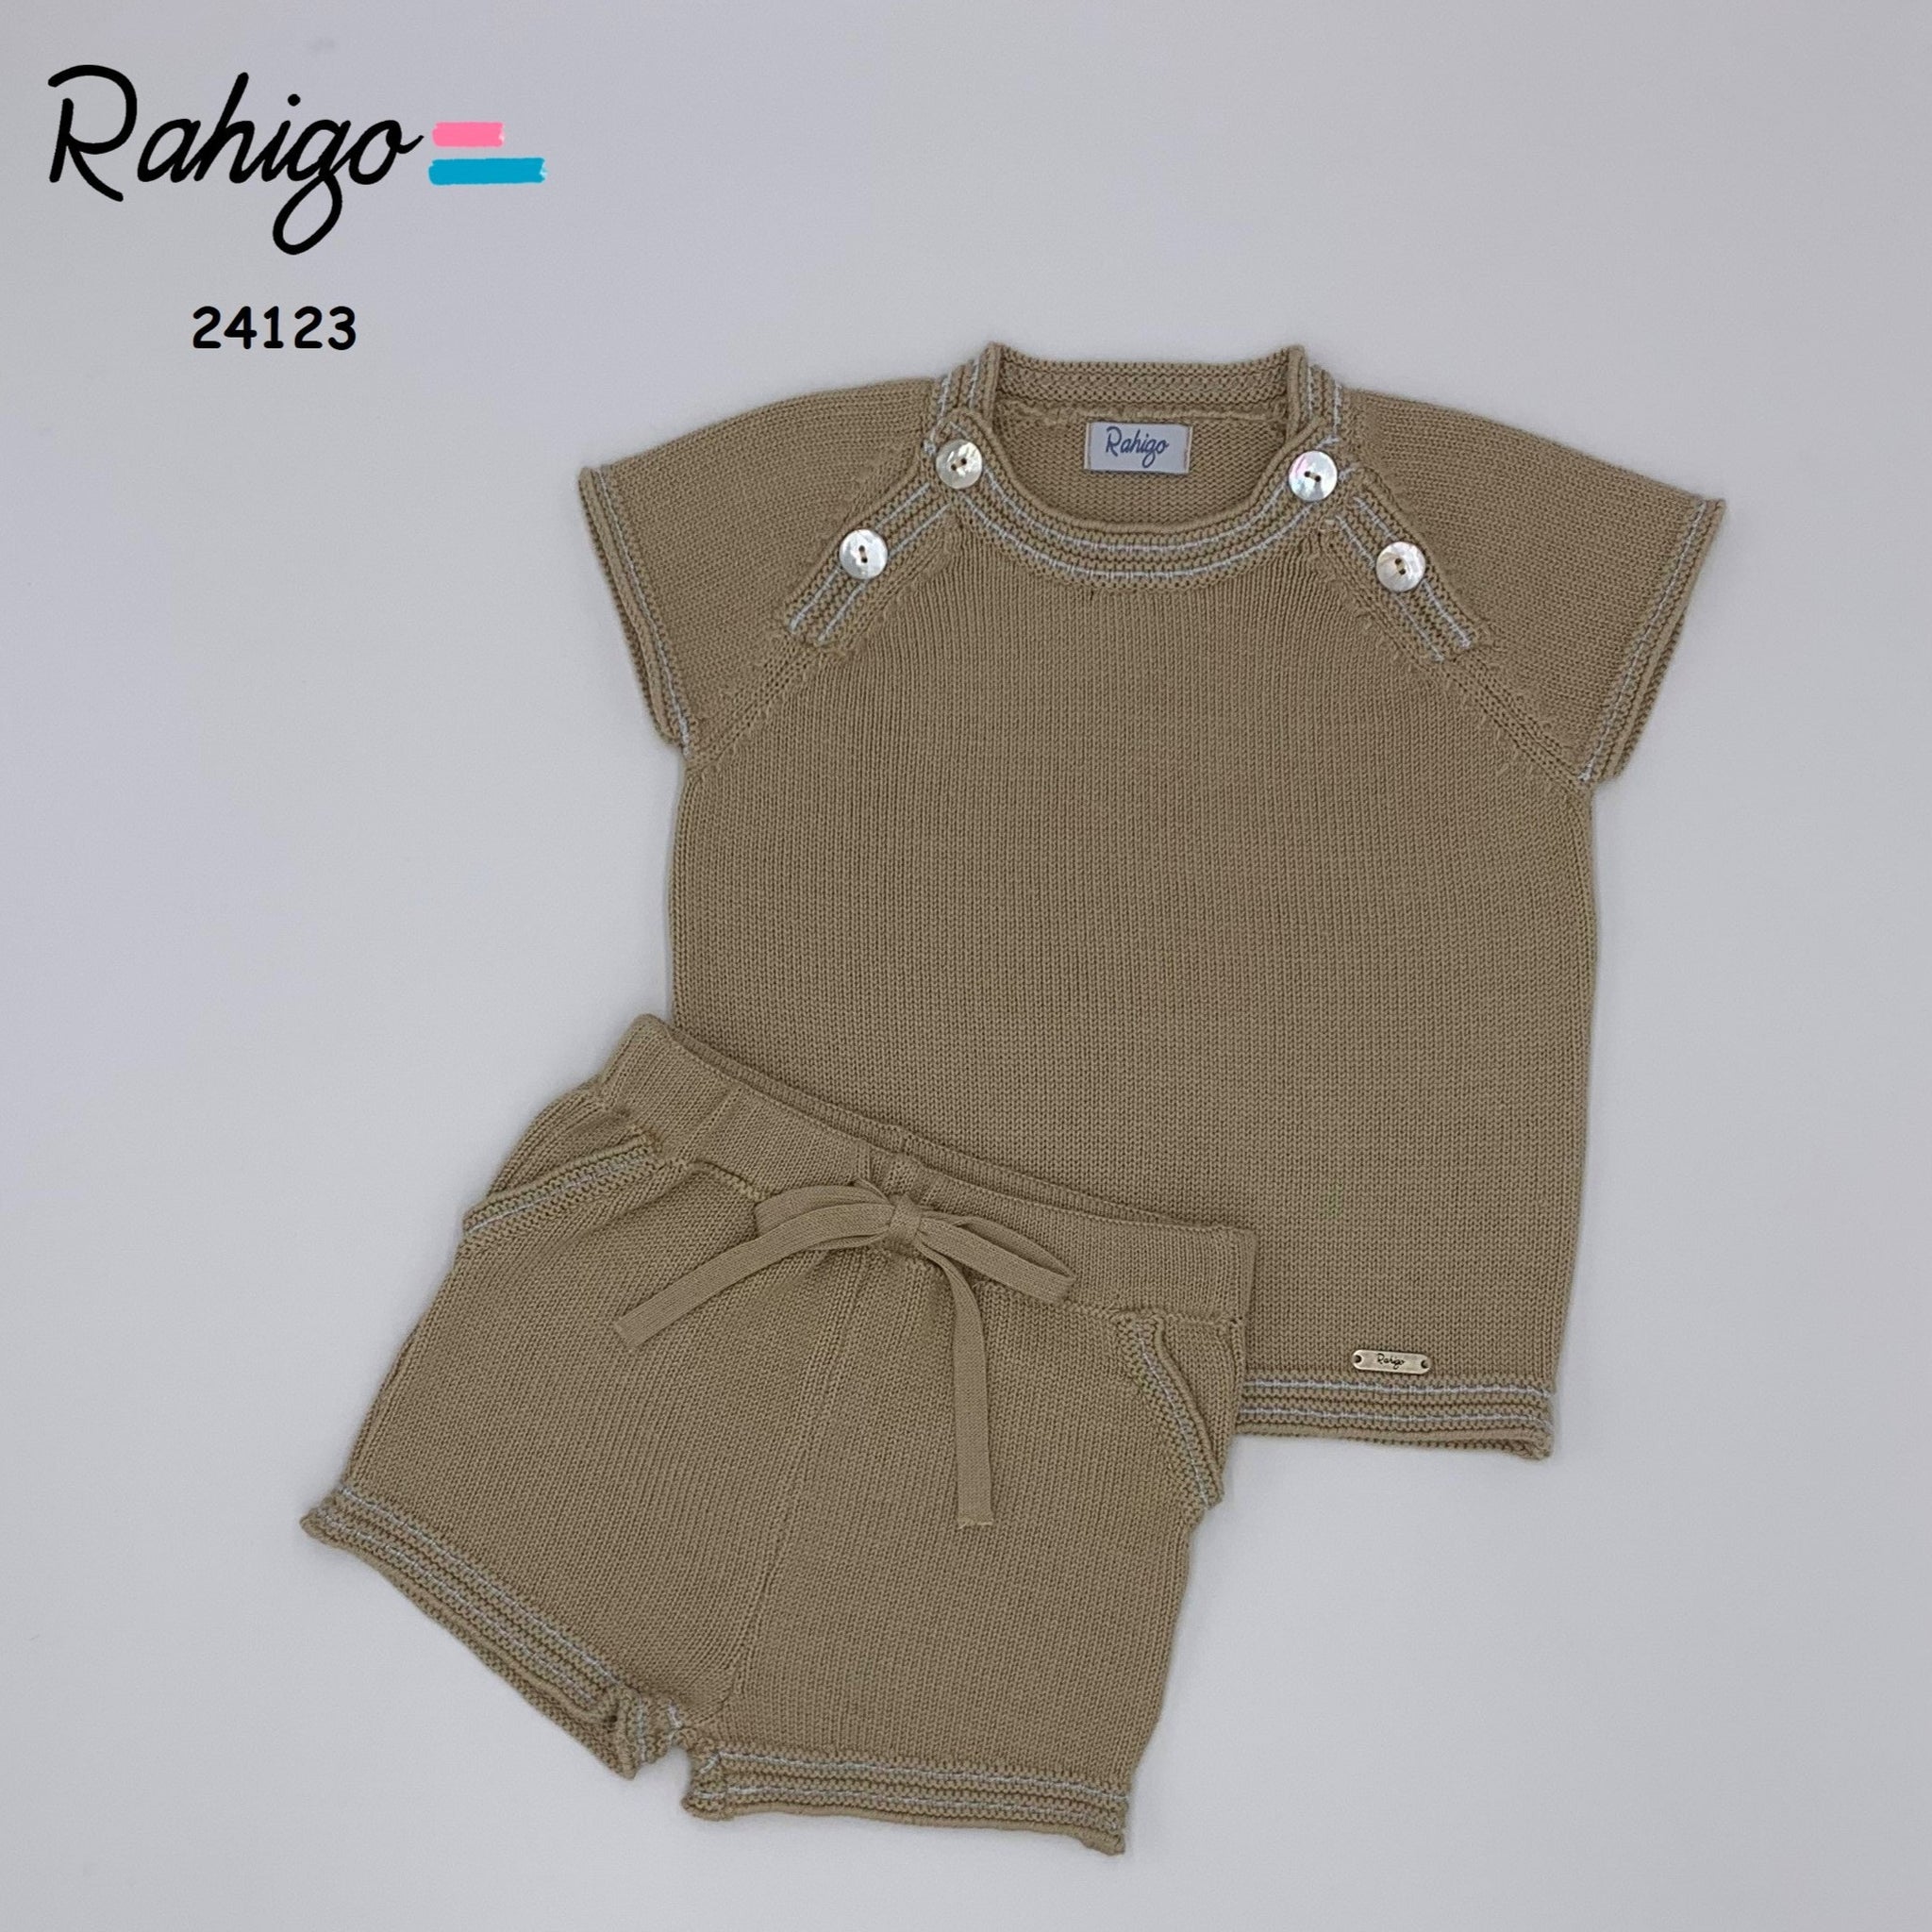 Rahigo 2 Piece Jumper & Shorts Blue/Camel